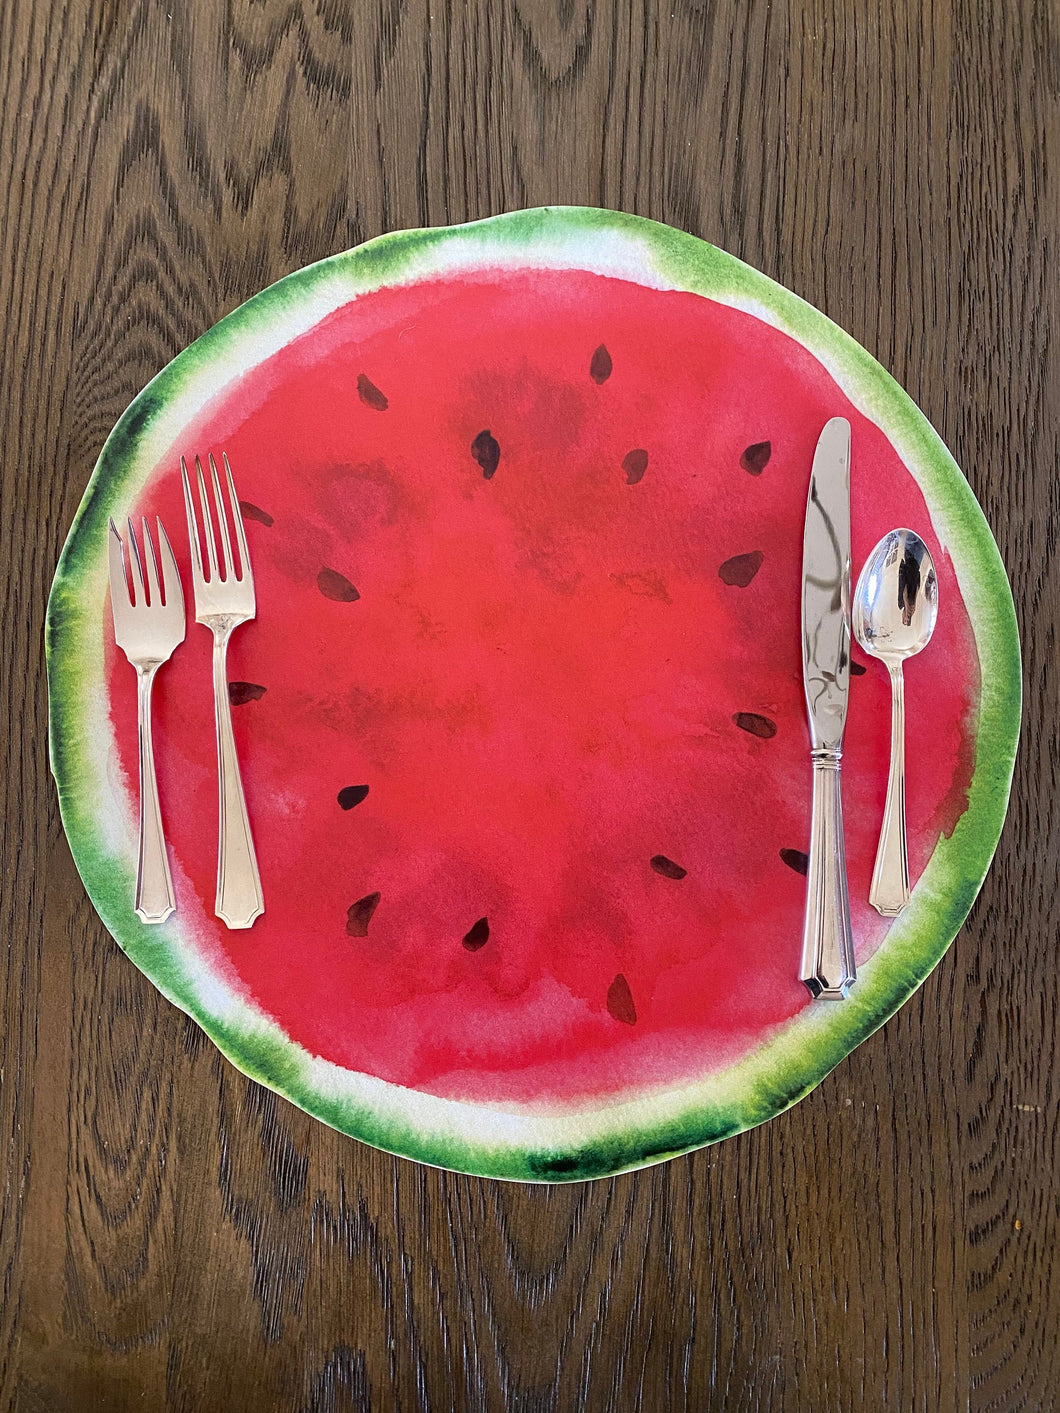 Watermelon Placemat